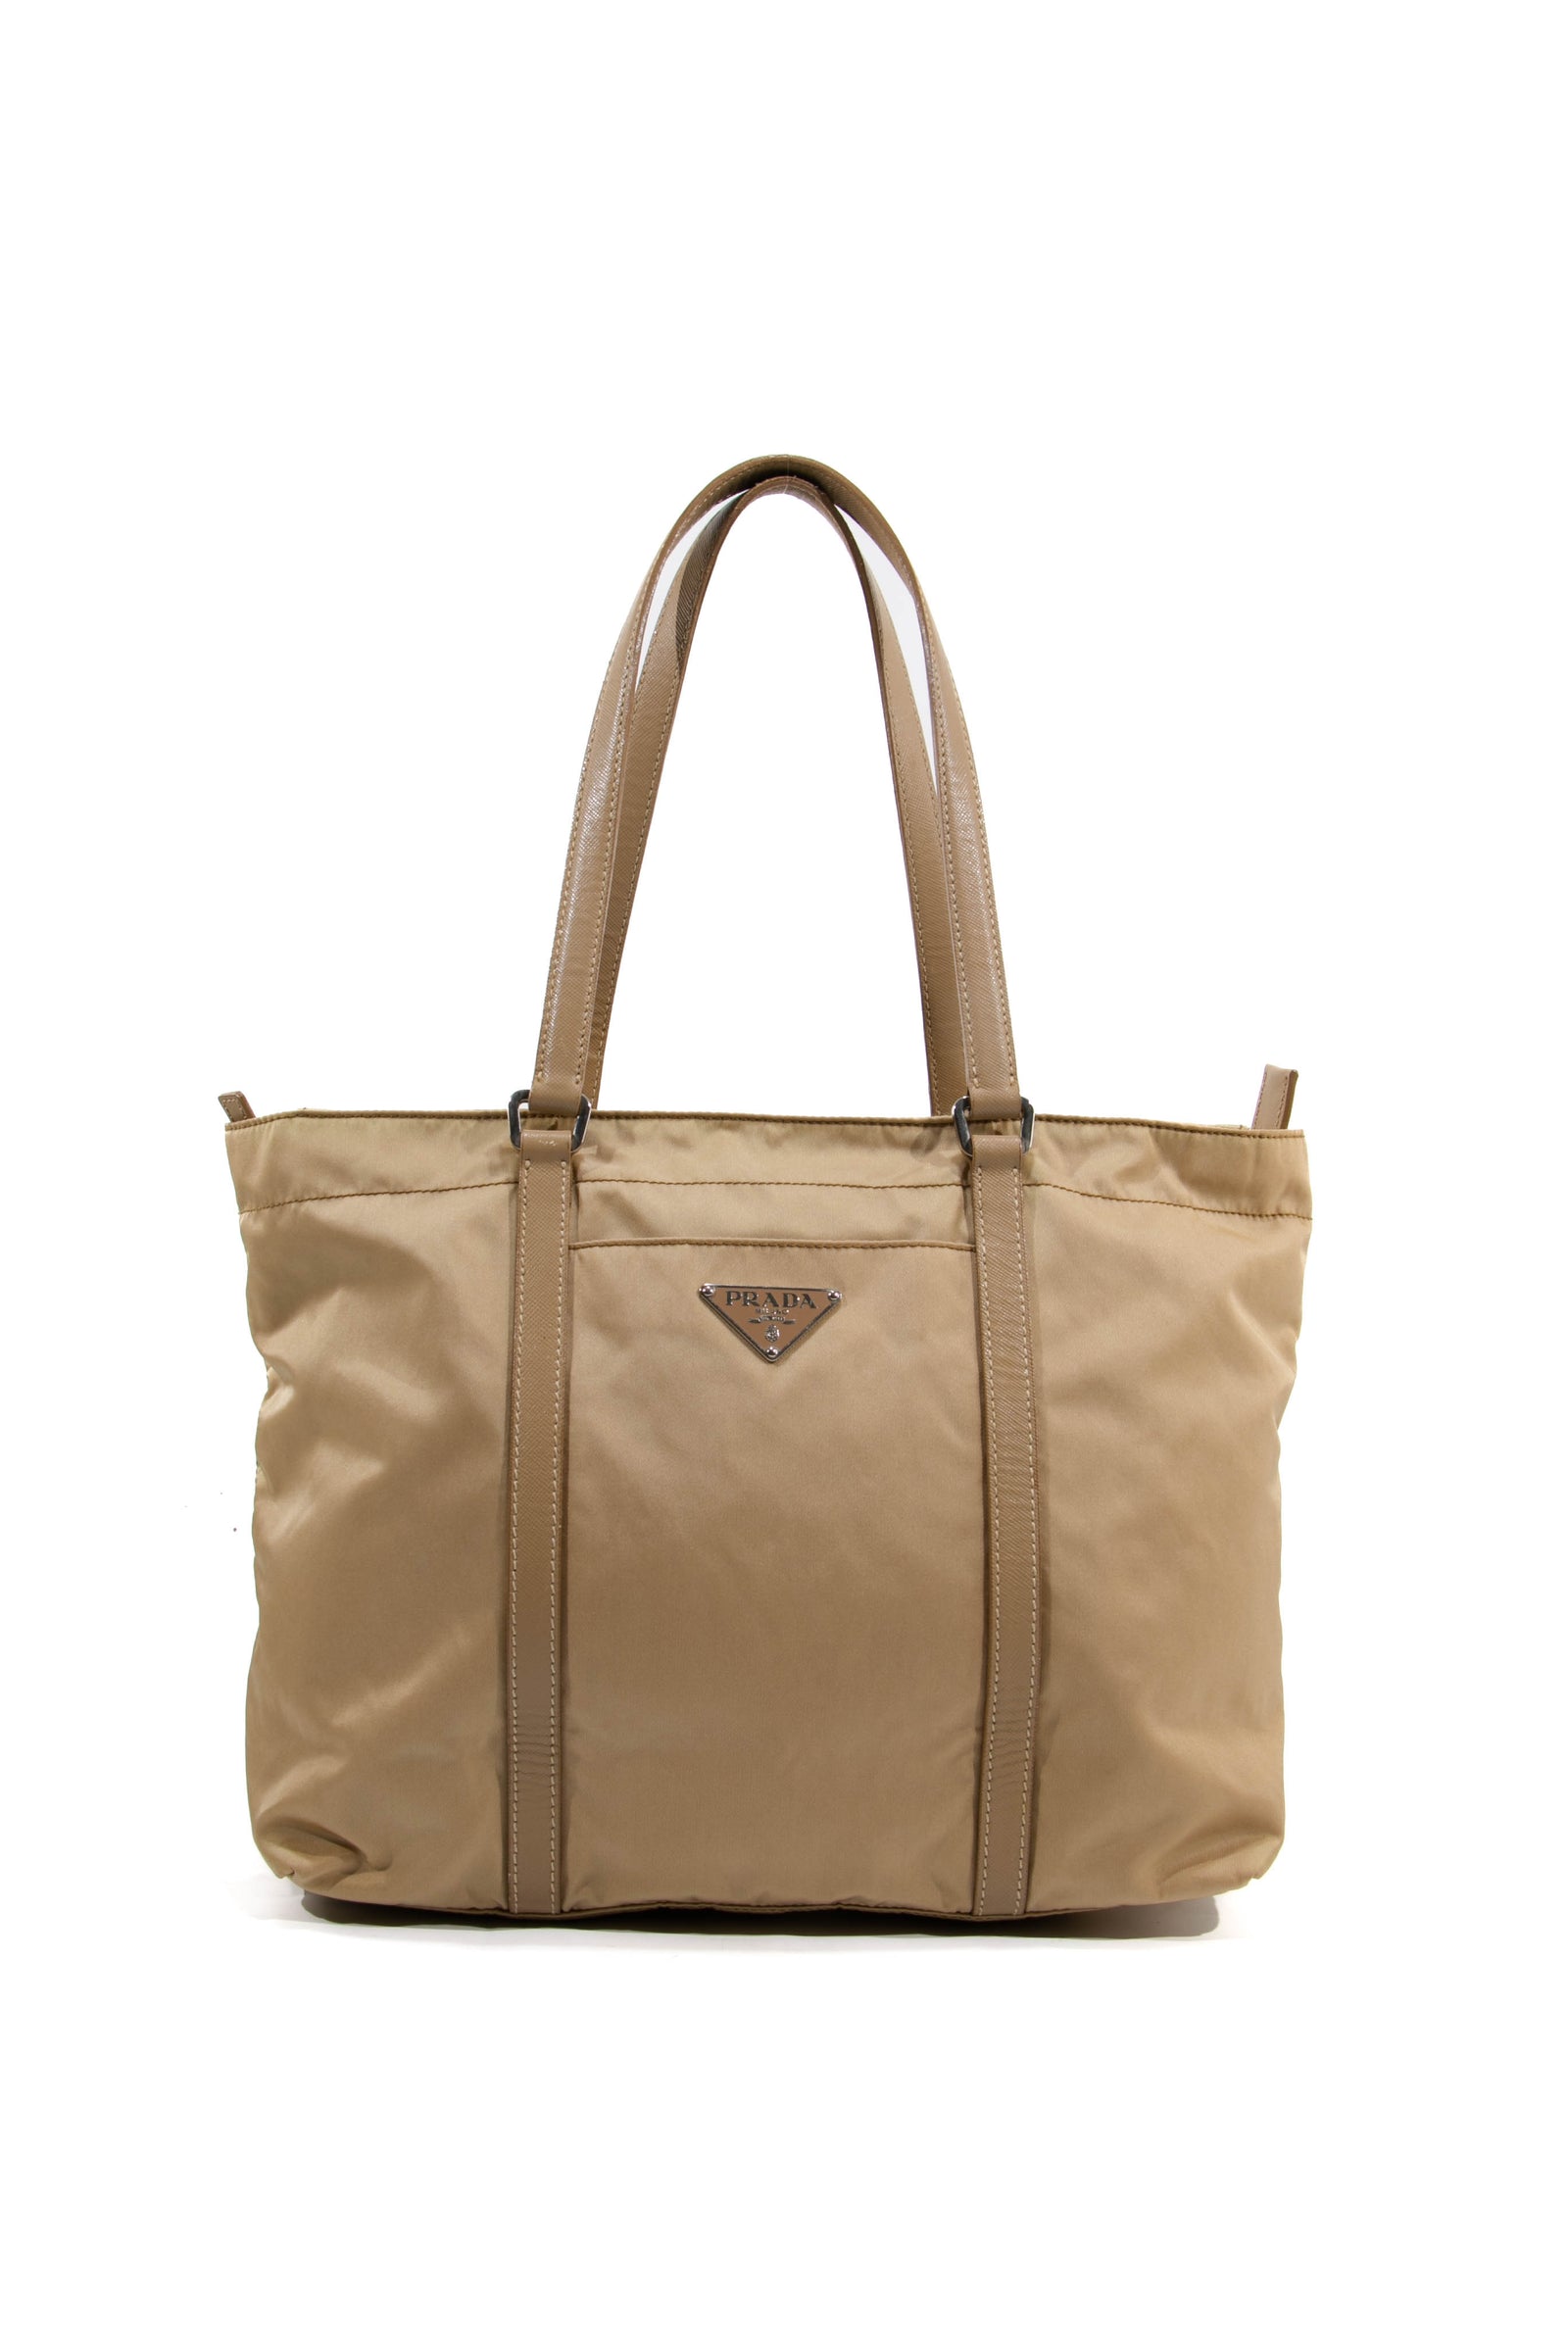 best-designer-bags-for-work-prada-city-calf-double-bag – Follow Meesh